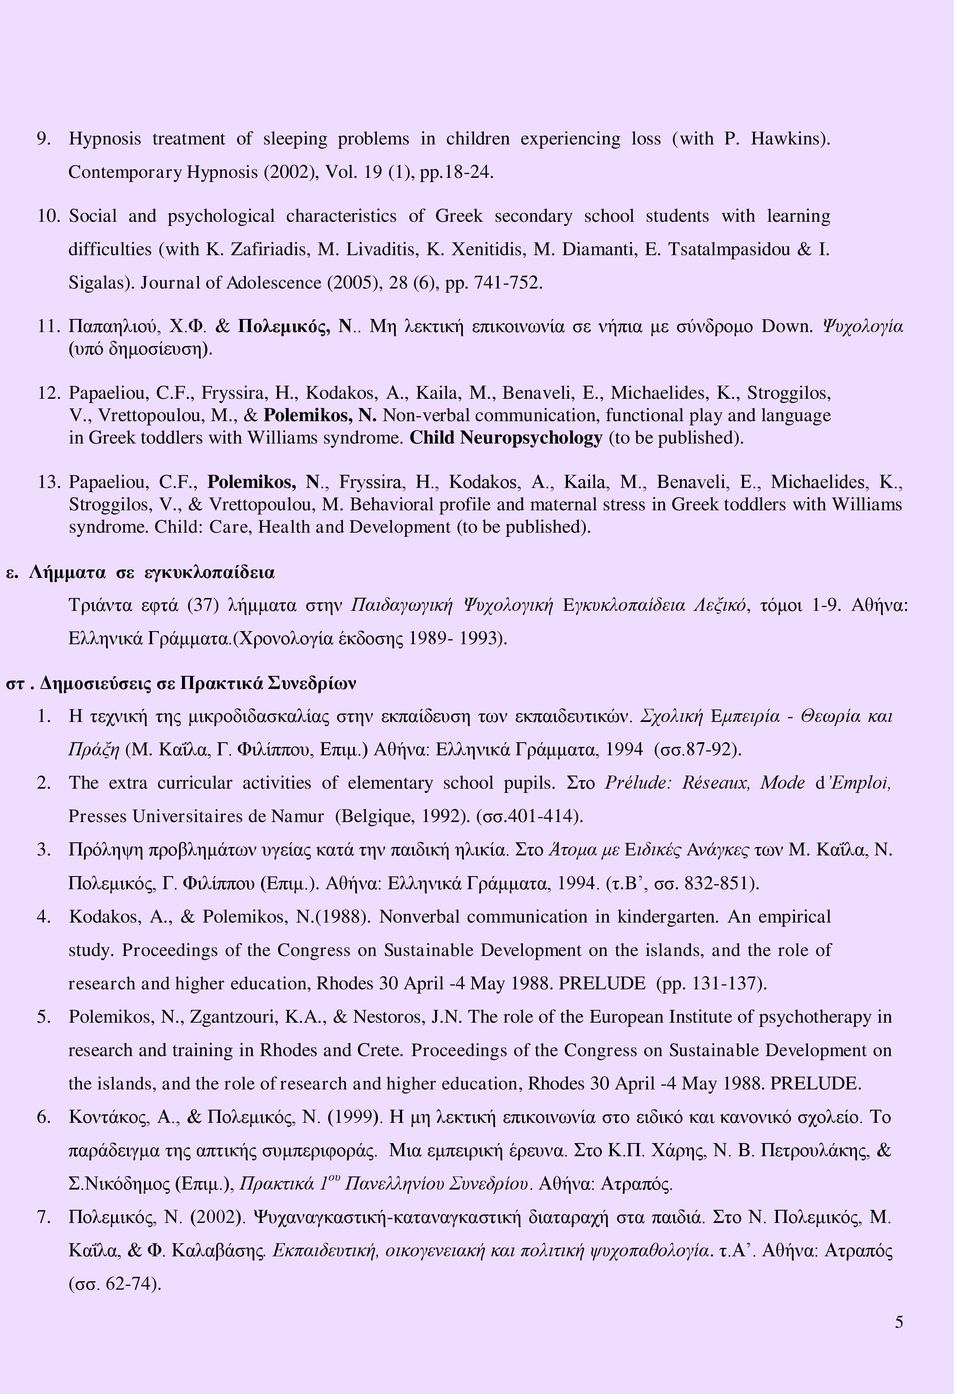 Journal of Adolescence (2005), 28 (6), pp. 741-752. 11. Παπαειηνύ, Υ.Φ. & Πολεμικός, Ν.. Με ιεθηηθή επηθνηλσλία ζε λήπηα κε ζύλδξνκν Down. Ψςσολογία (ππό δεκνζίεπζε). 12. Papaeliou, C.F., Fryssira, Η.